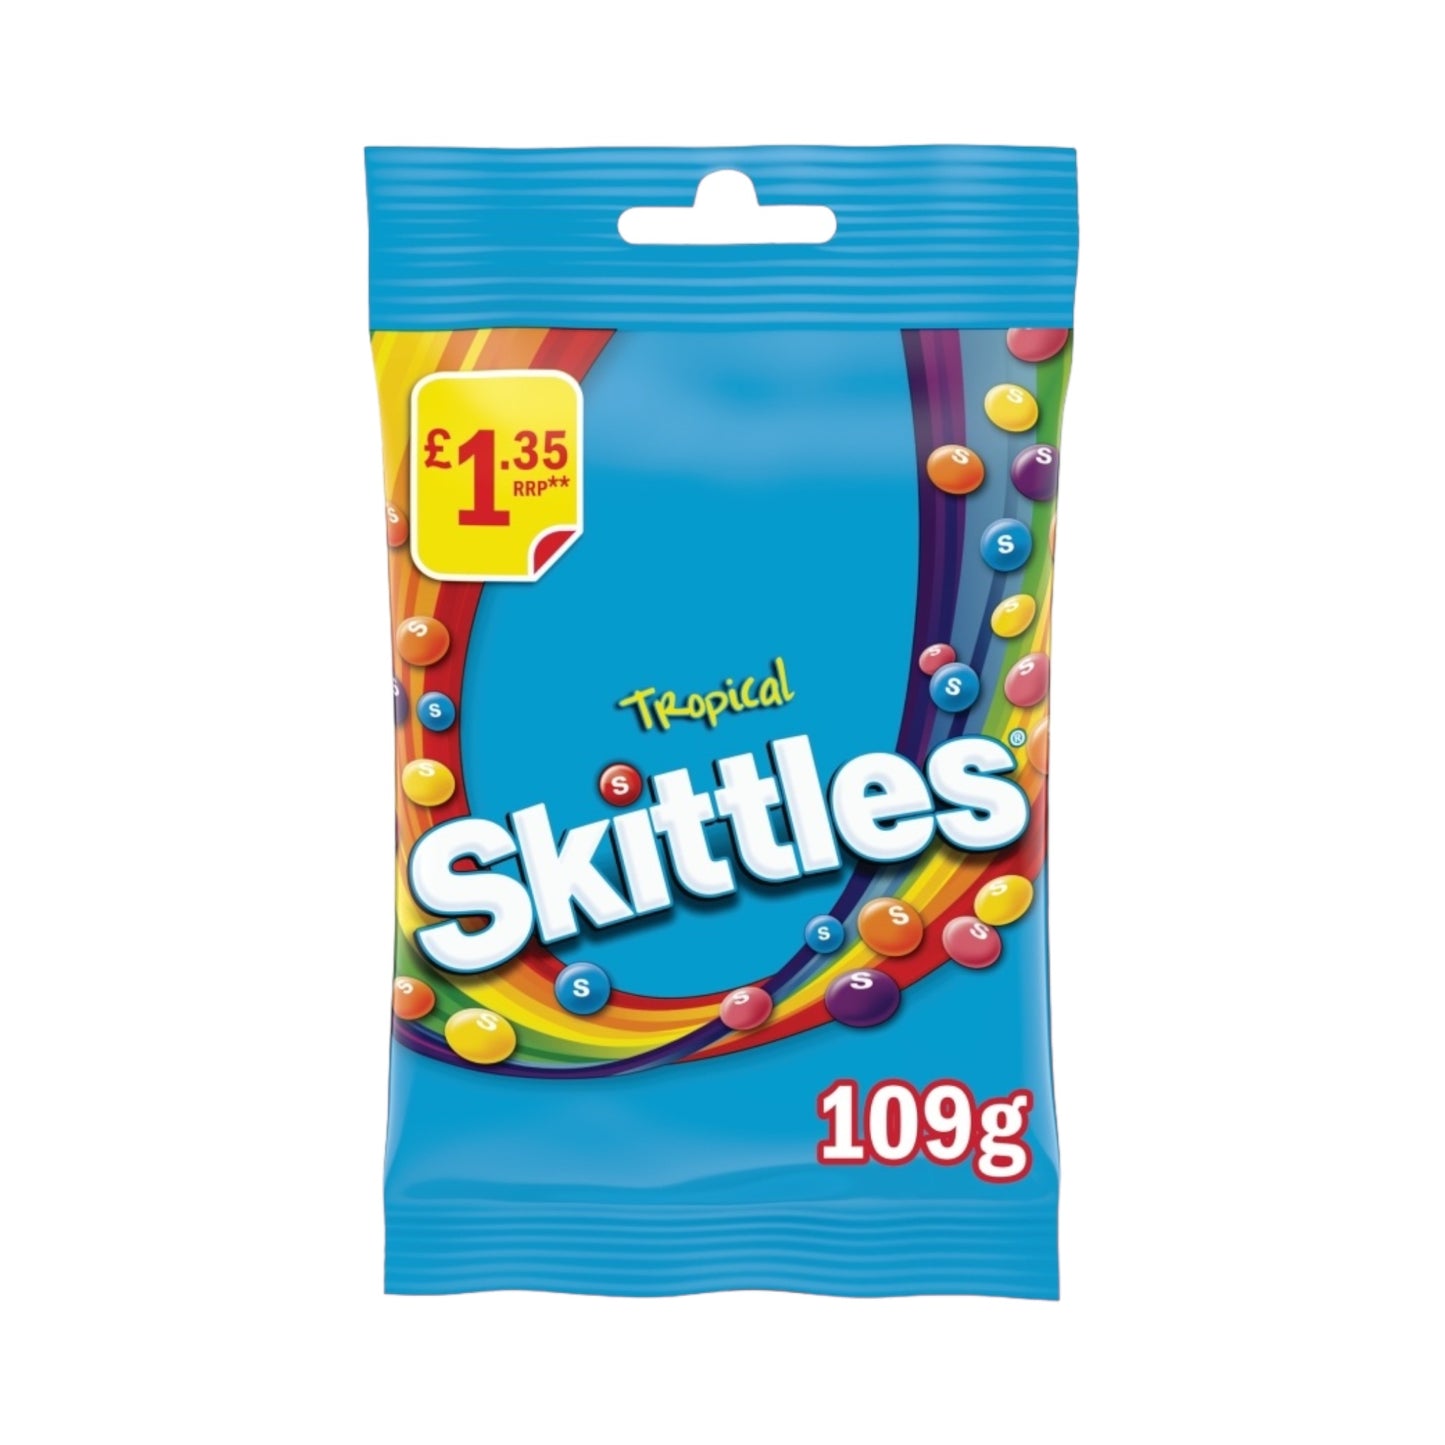 Skittles Tropical - 109g (PMP £1.35)